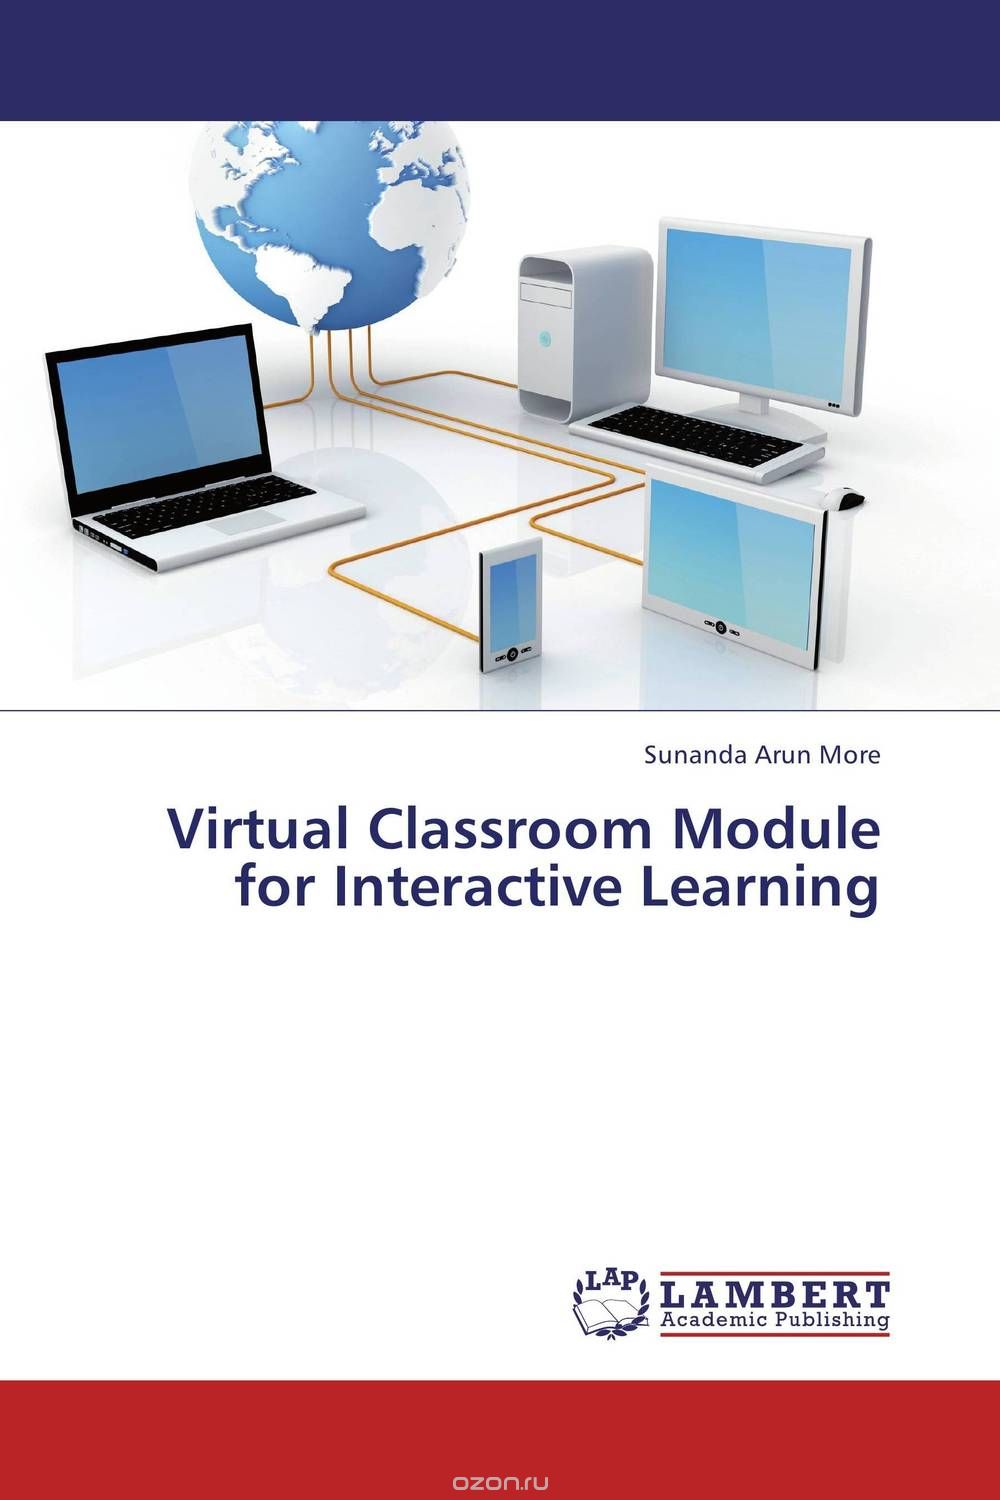 Скачать книгу "Virtual Classroom Module for Interactive Learning"